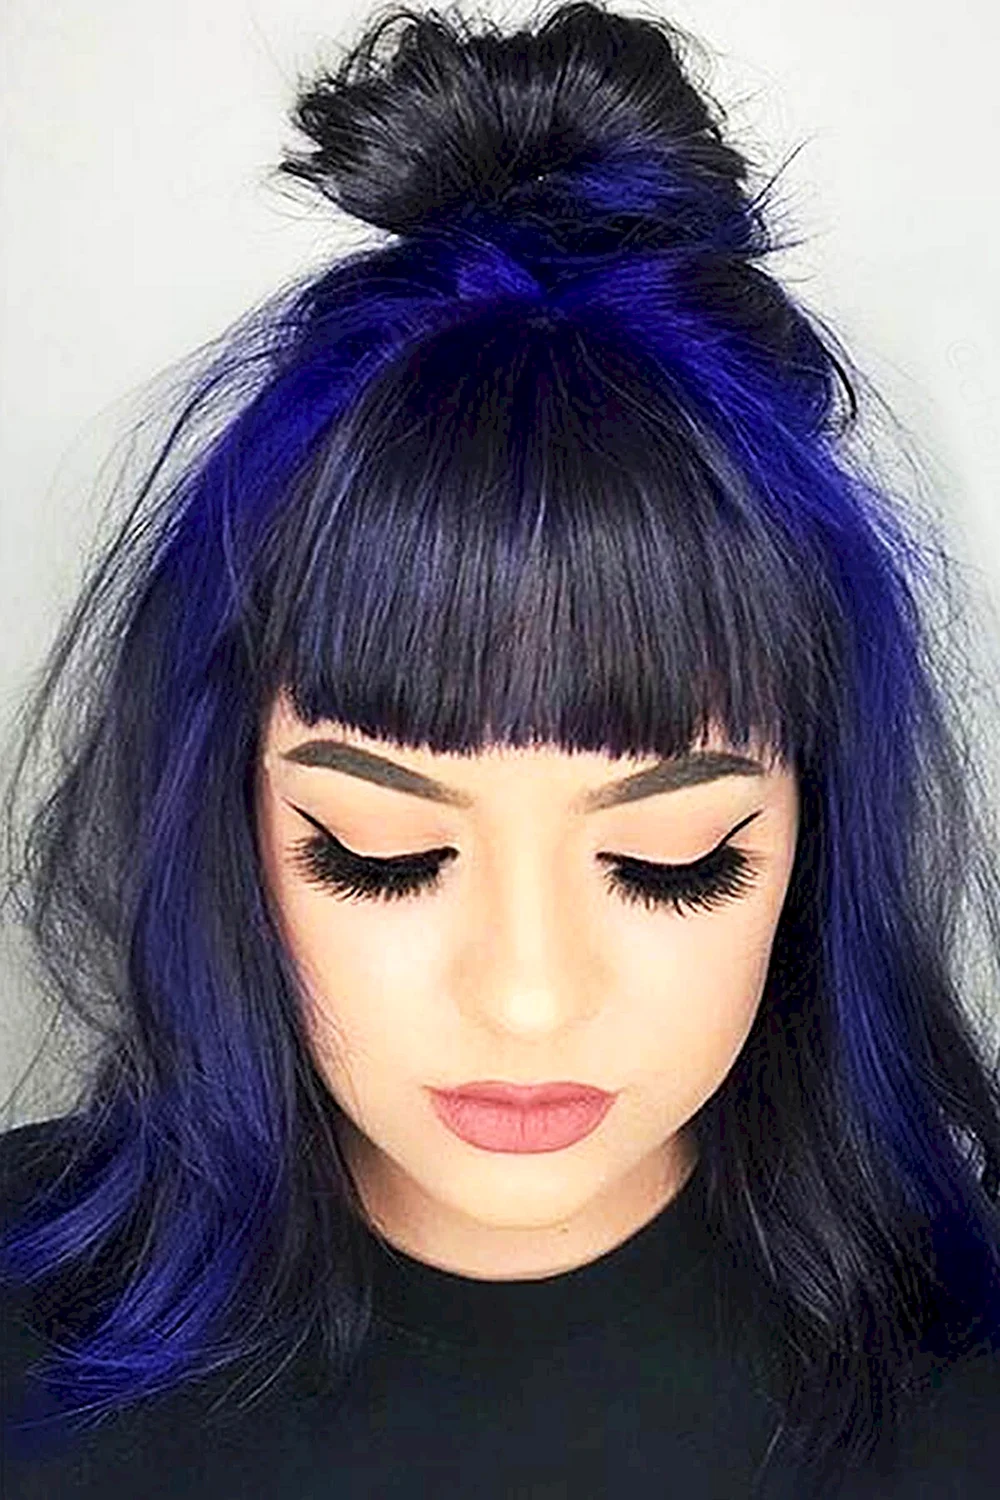 Purple hair with Bangs